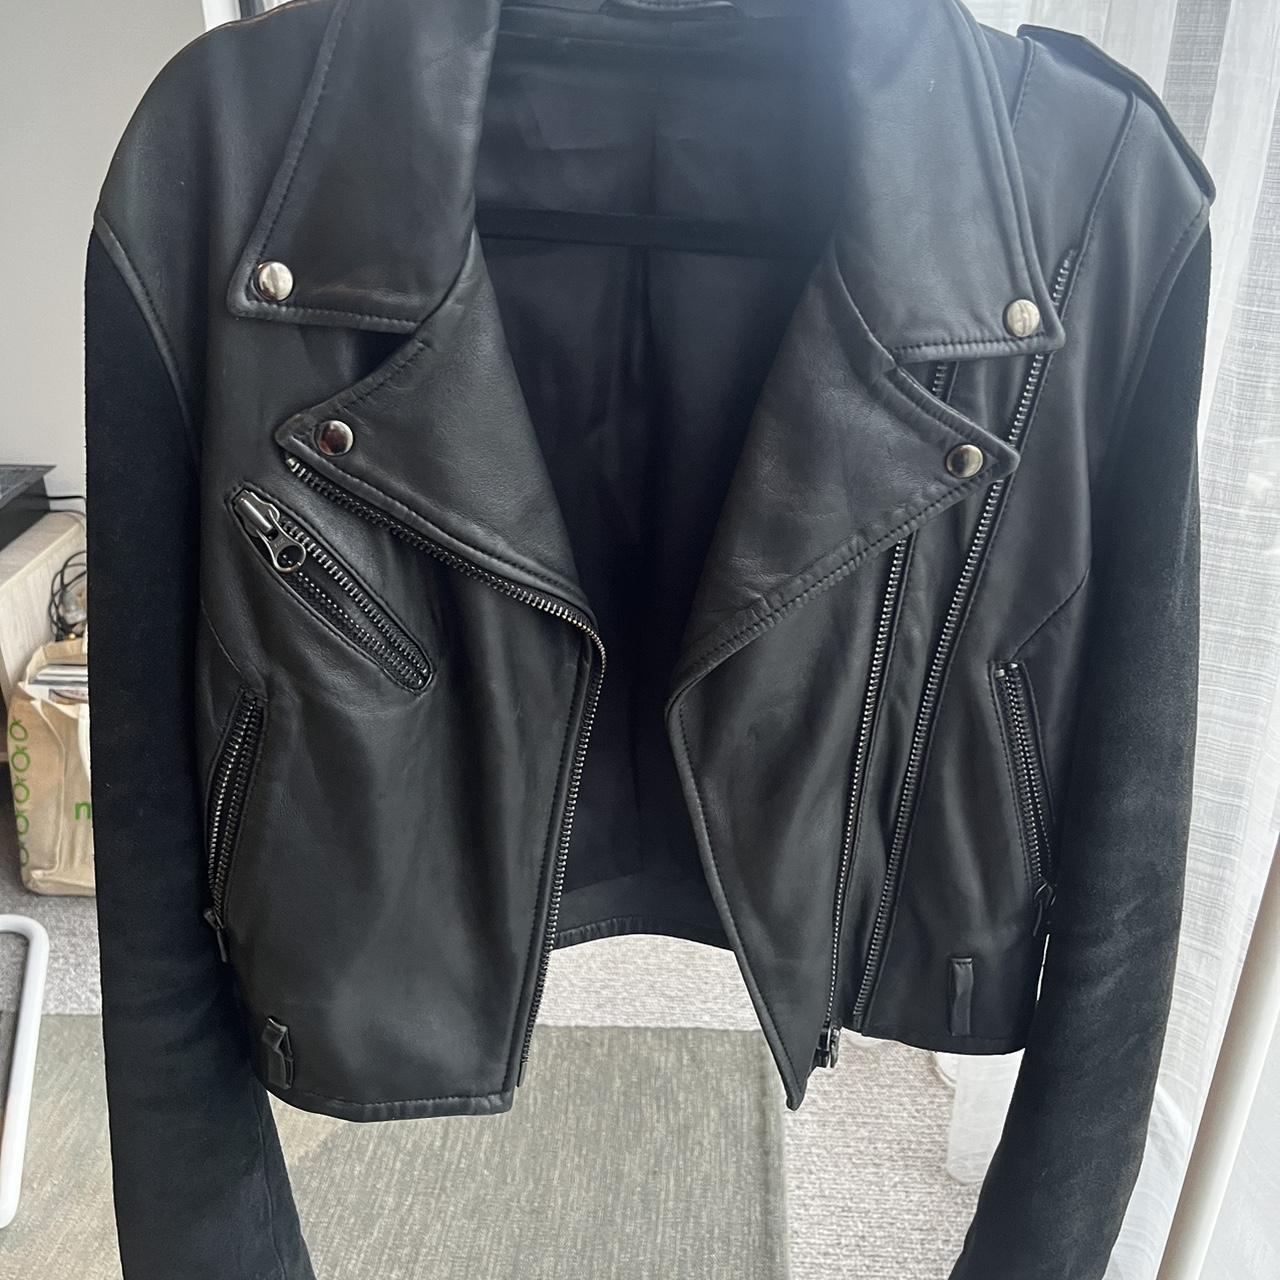 Acne Studios Size 36 Leather Jacket w suede... - Depop